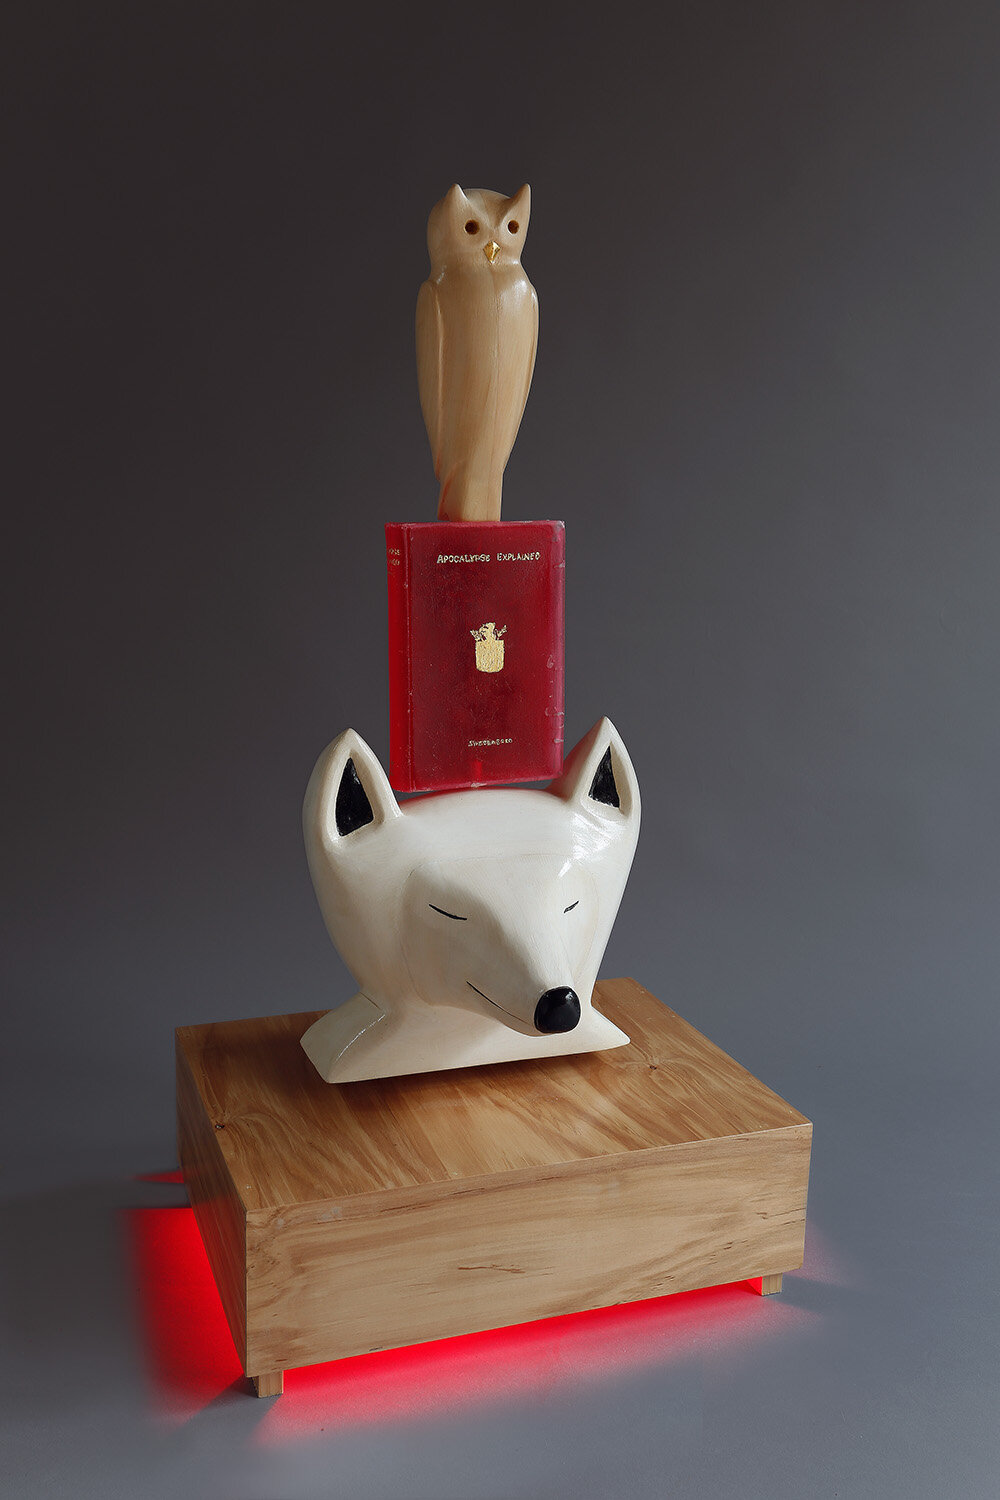 “Sleeping Fox, Book, and Owl,” 35” x 18” x 13.5”, Wood, cast resin, gold leaf, LED light, paint, @ Tom Gormally 2020